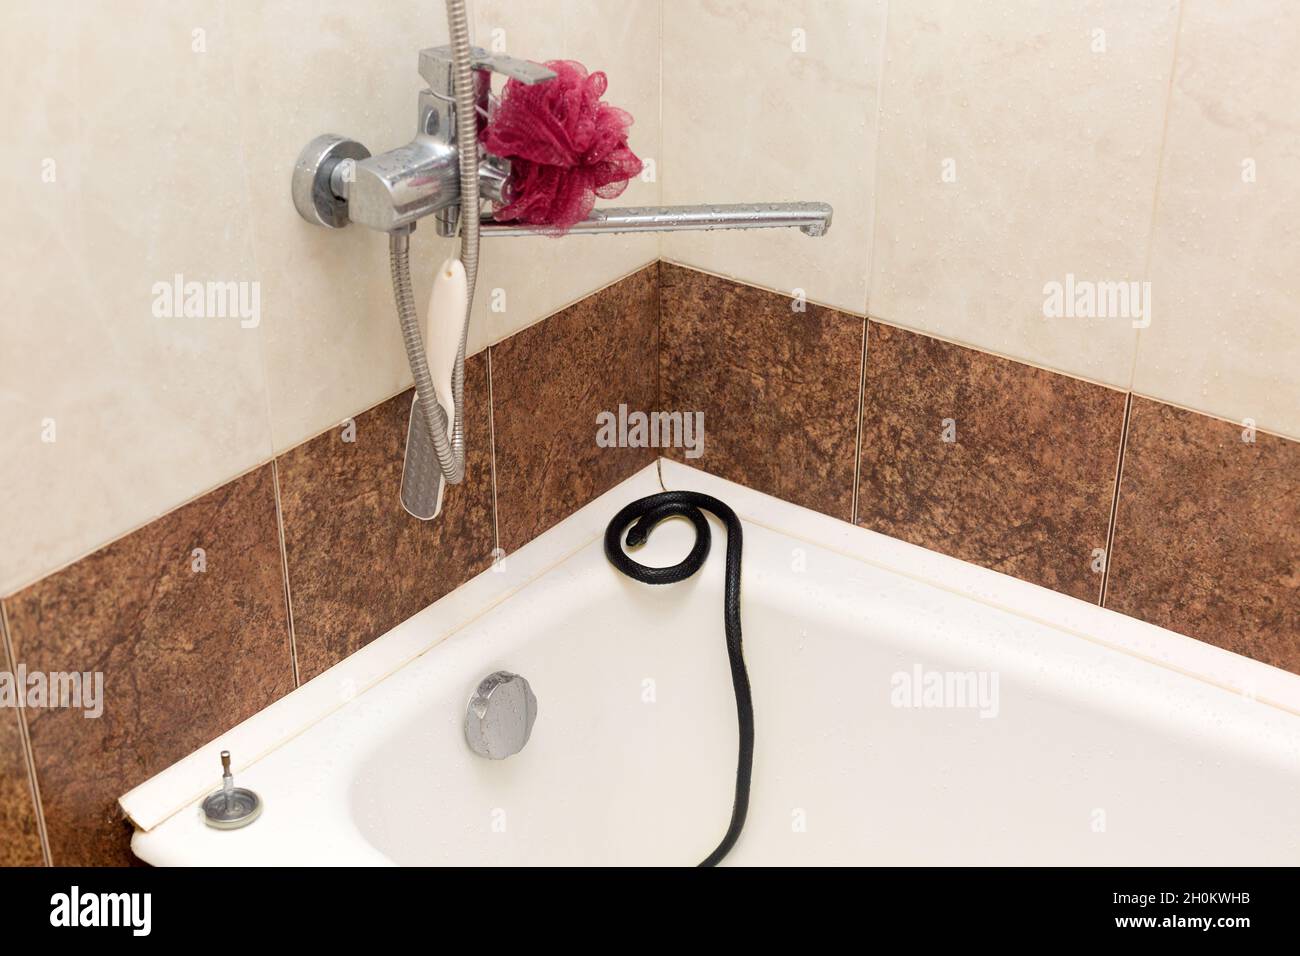 https://c8.alamy.com/comp/2H0KWHB/a-black-venomous-snake-on-the-edge-of-a-white-bathtub-in-an-apartment-2H0KWHB.jpg